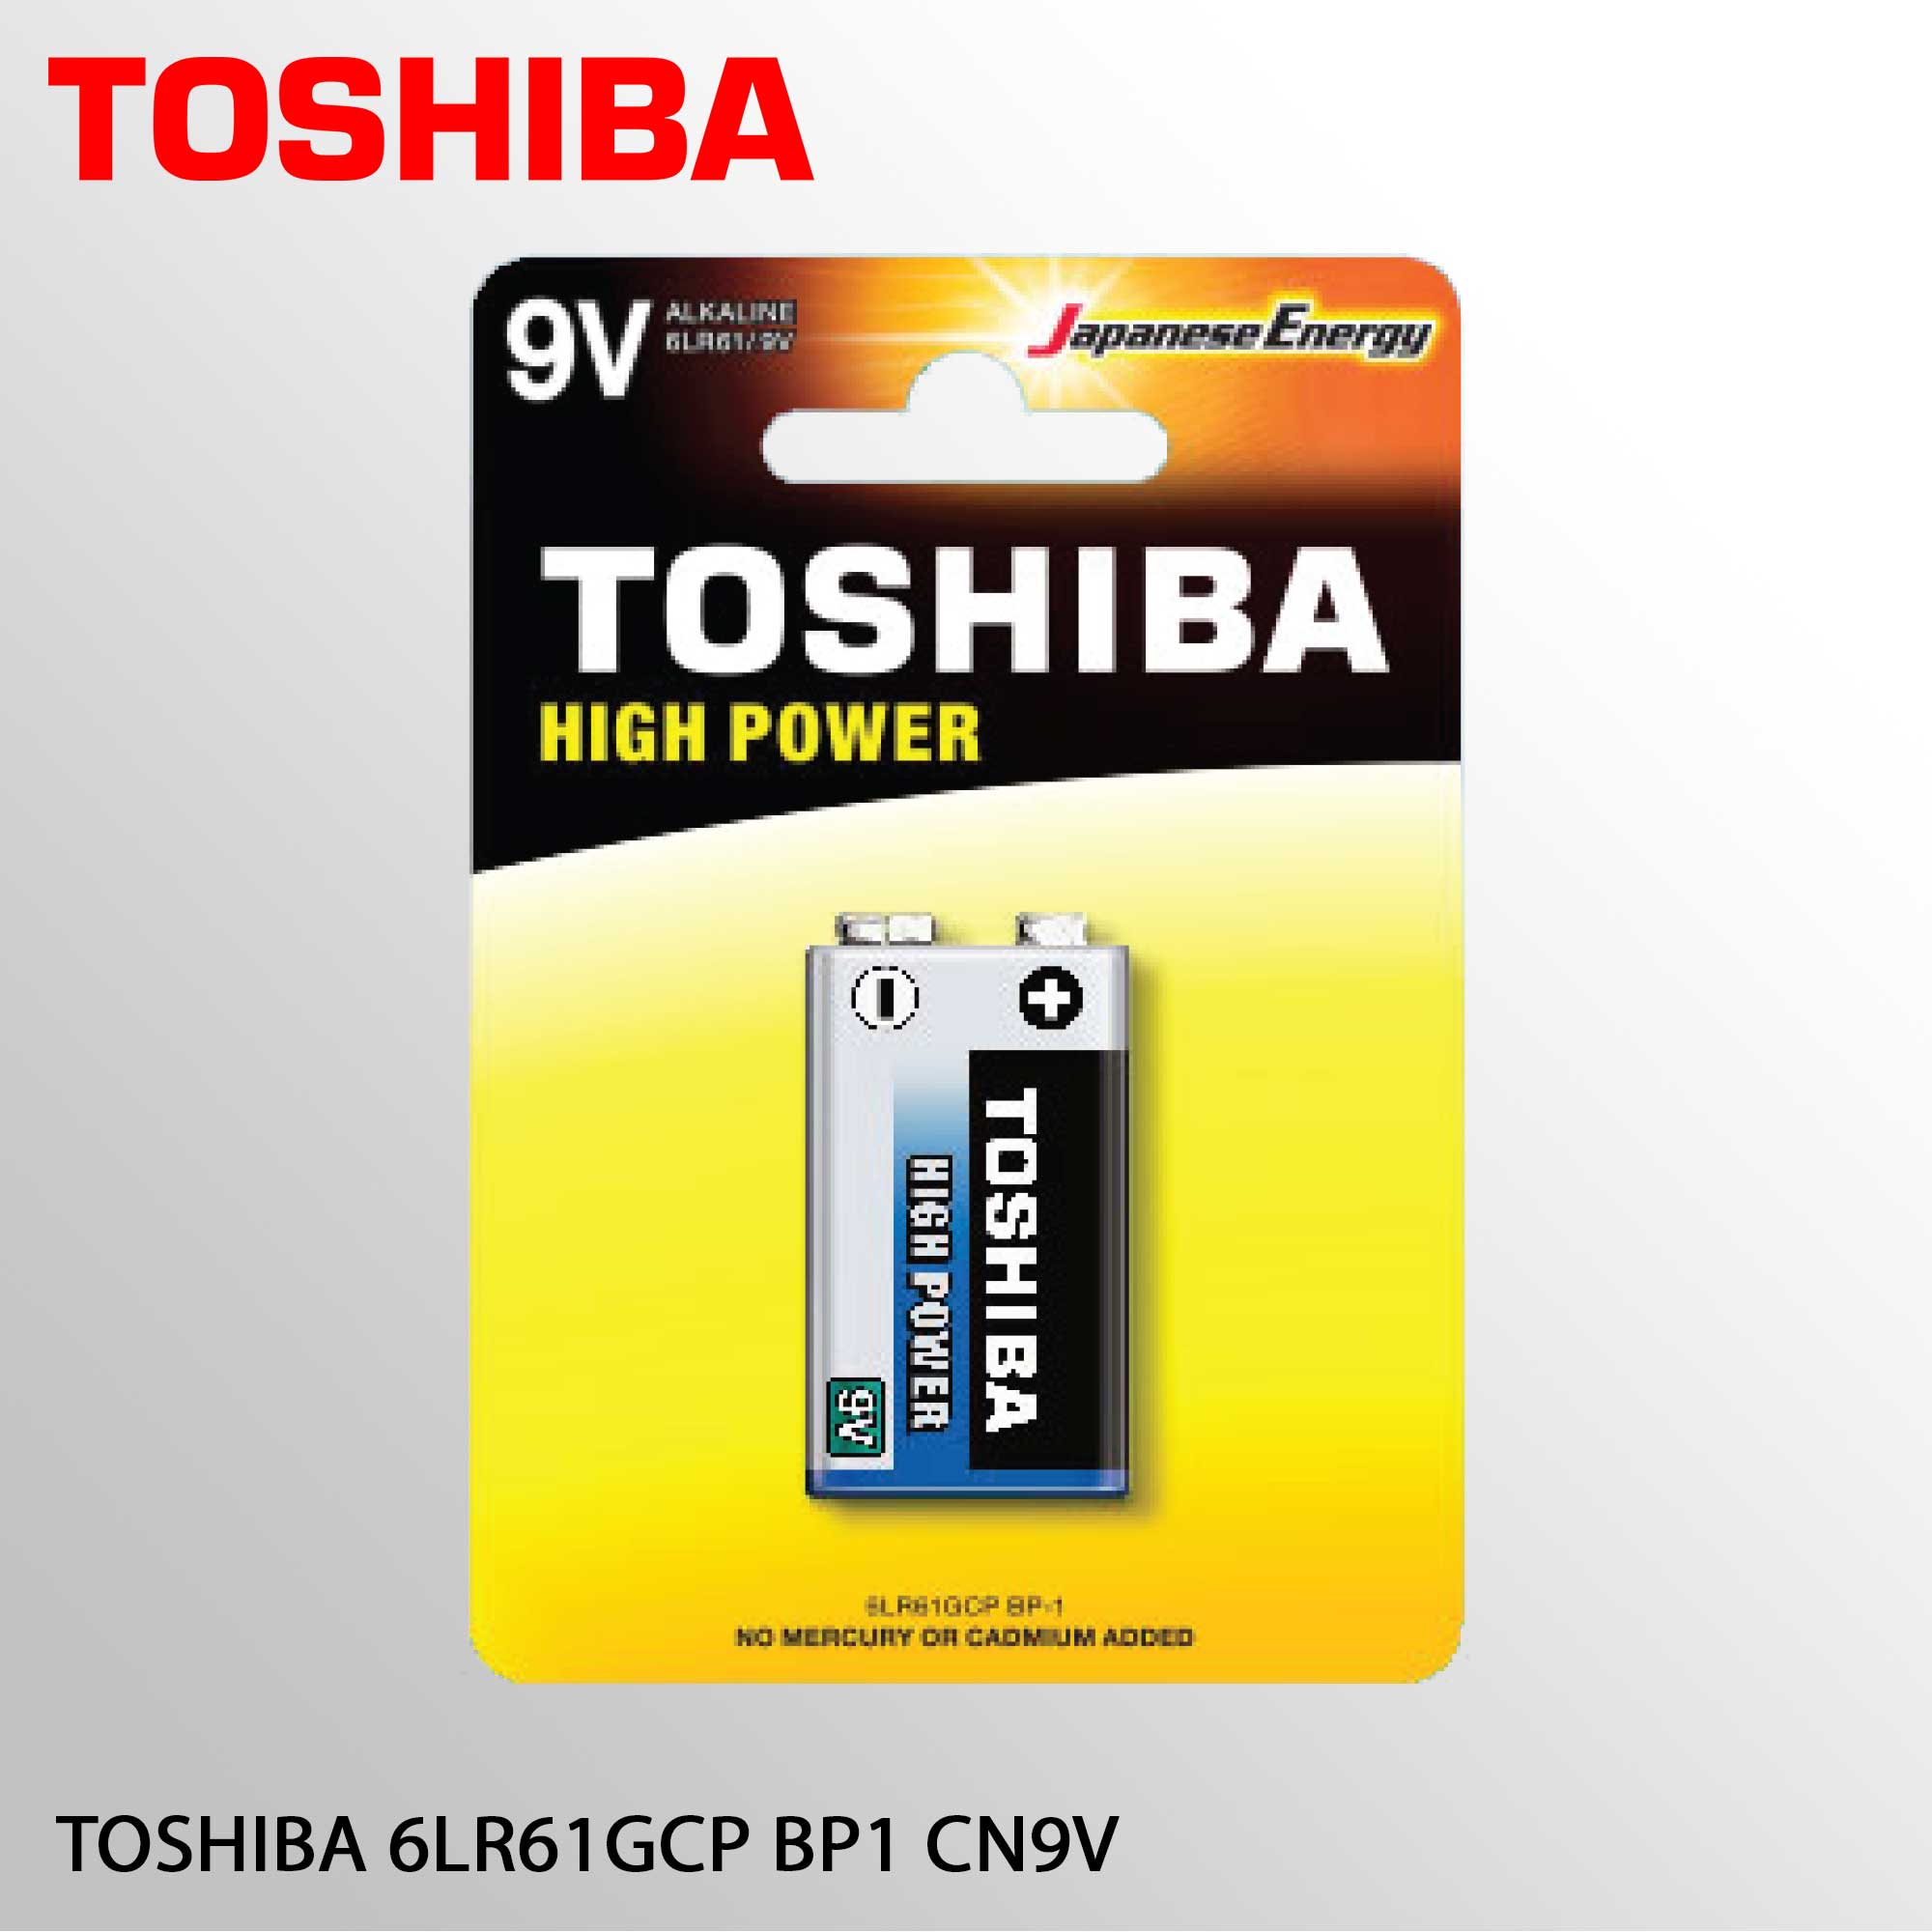 TOSHIBA 6LR61GCP BP1 CN9V